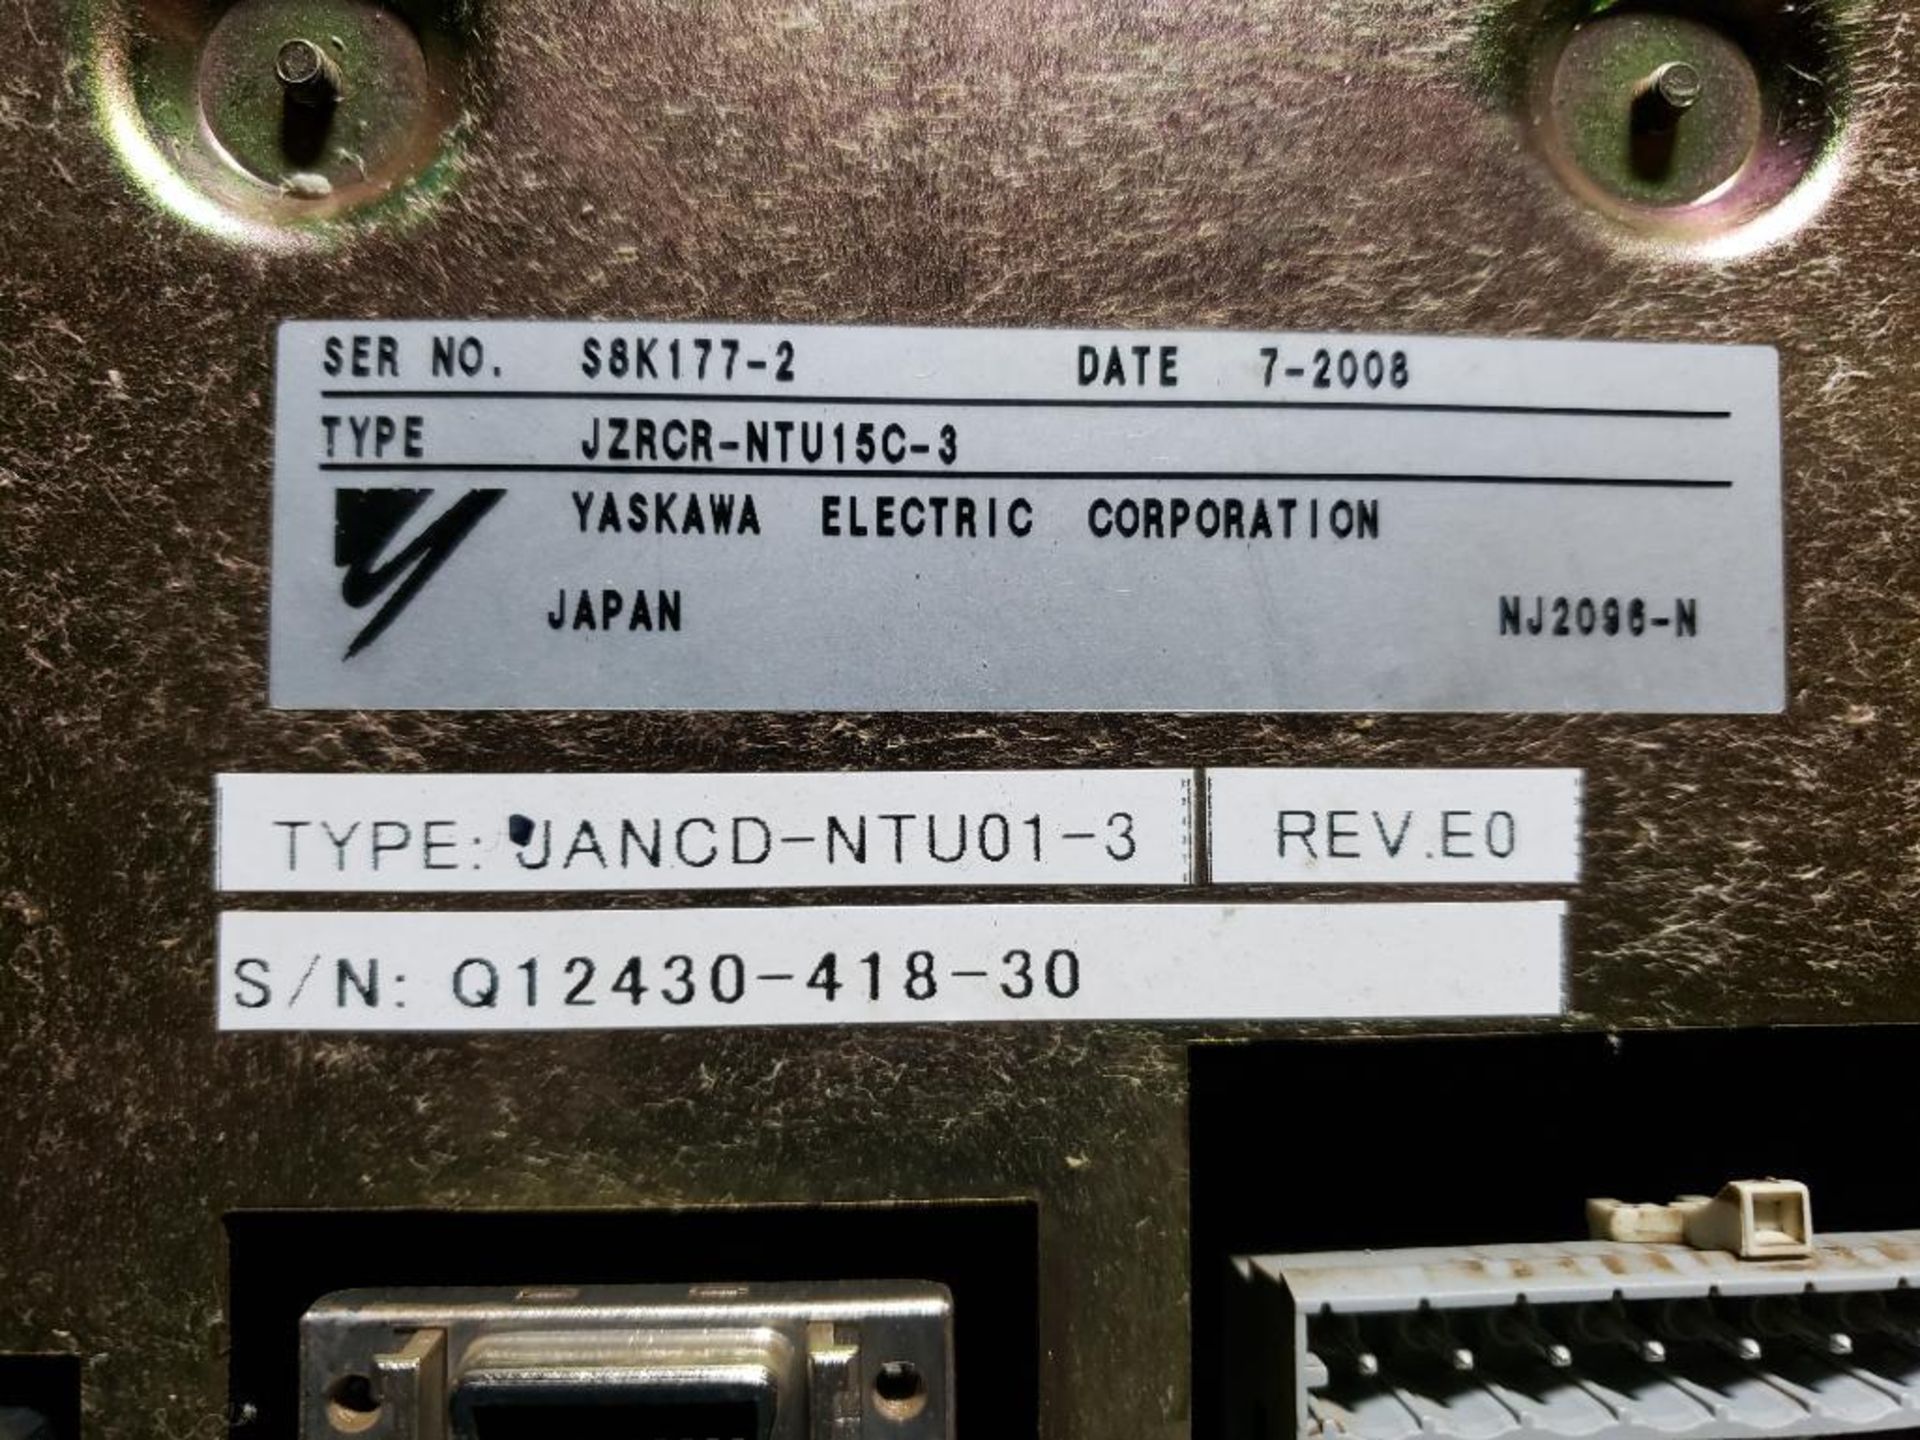 Yaskawa power supply. Part number JZRCR-NTU15-2 / JANCD-NTU01-2. - Image 2 of 5